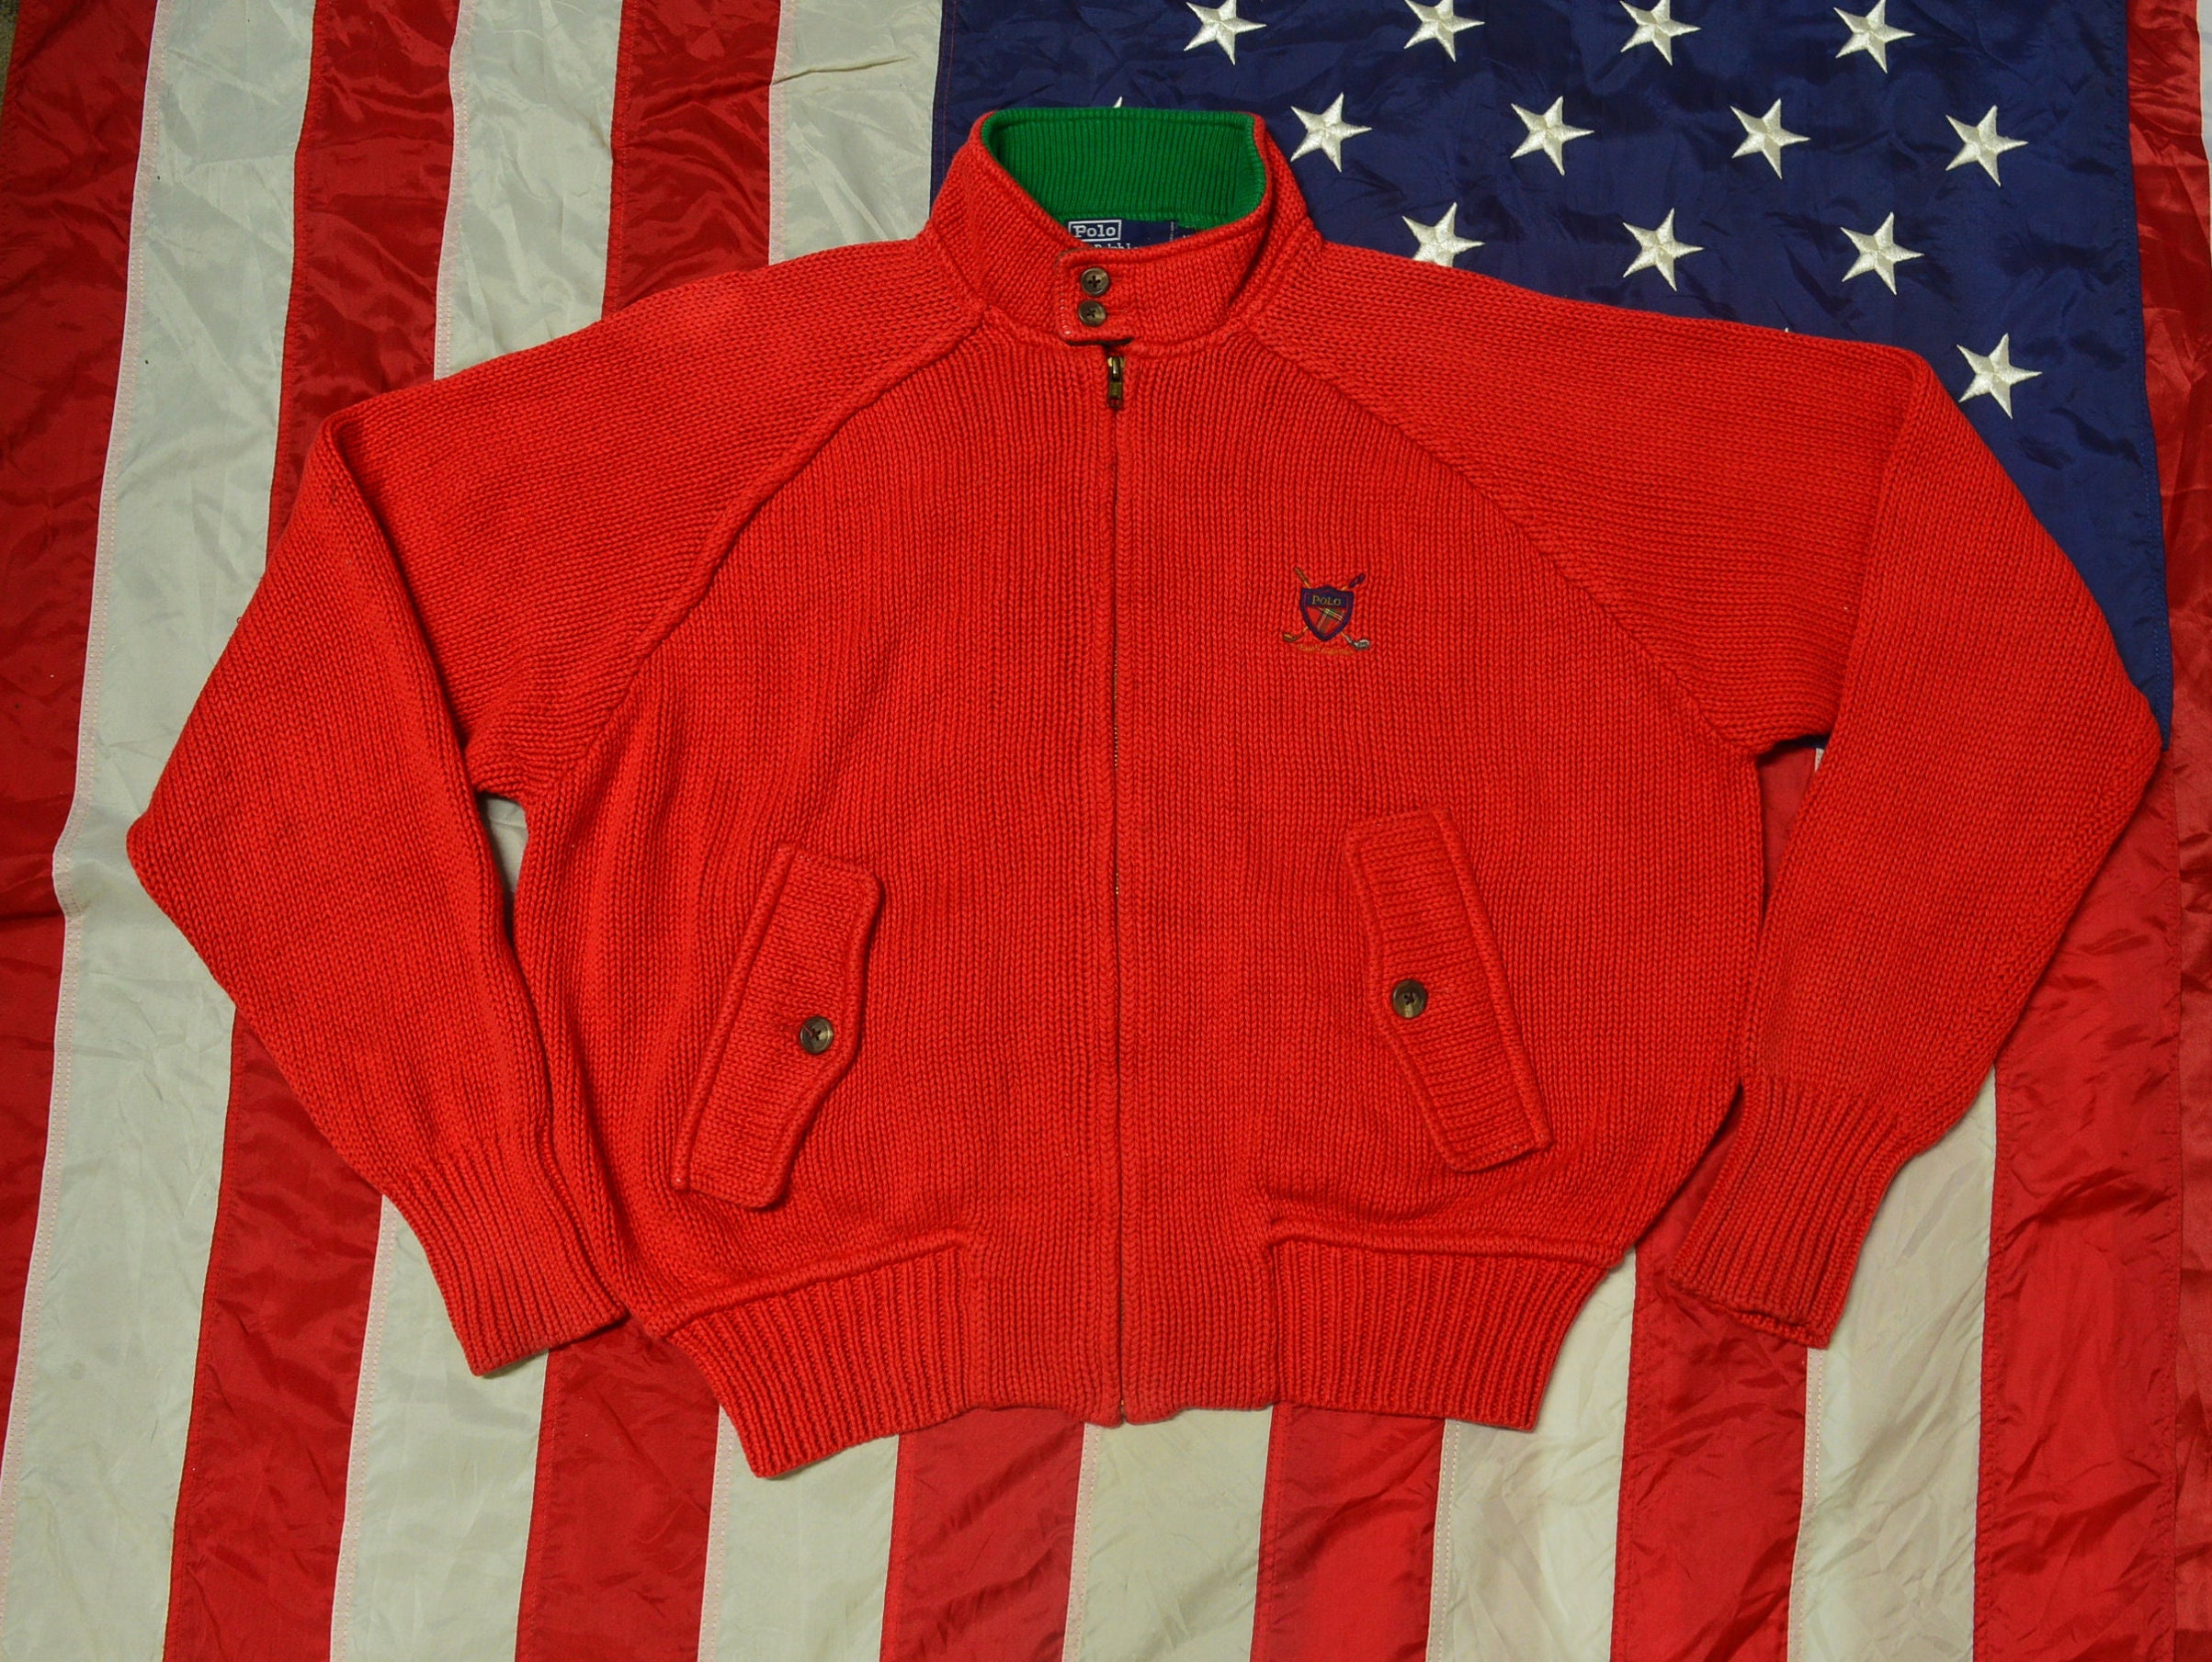 90s Polo Ralph Lauren Hooded Jacket - Men's Large, Women's XL